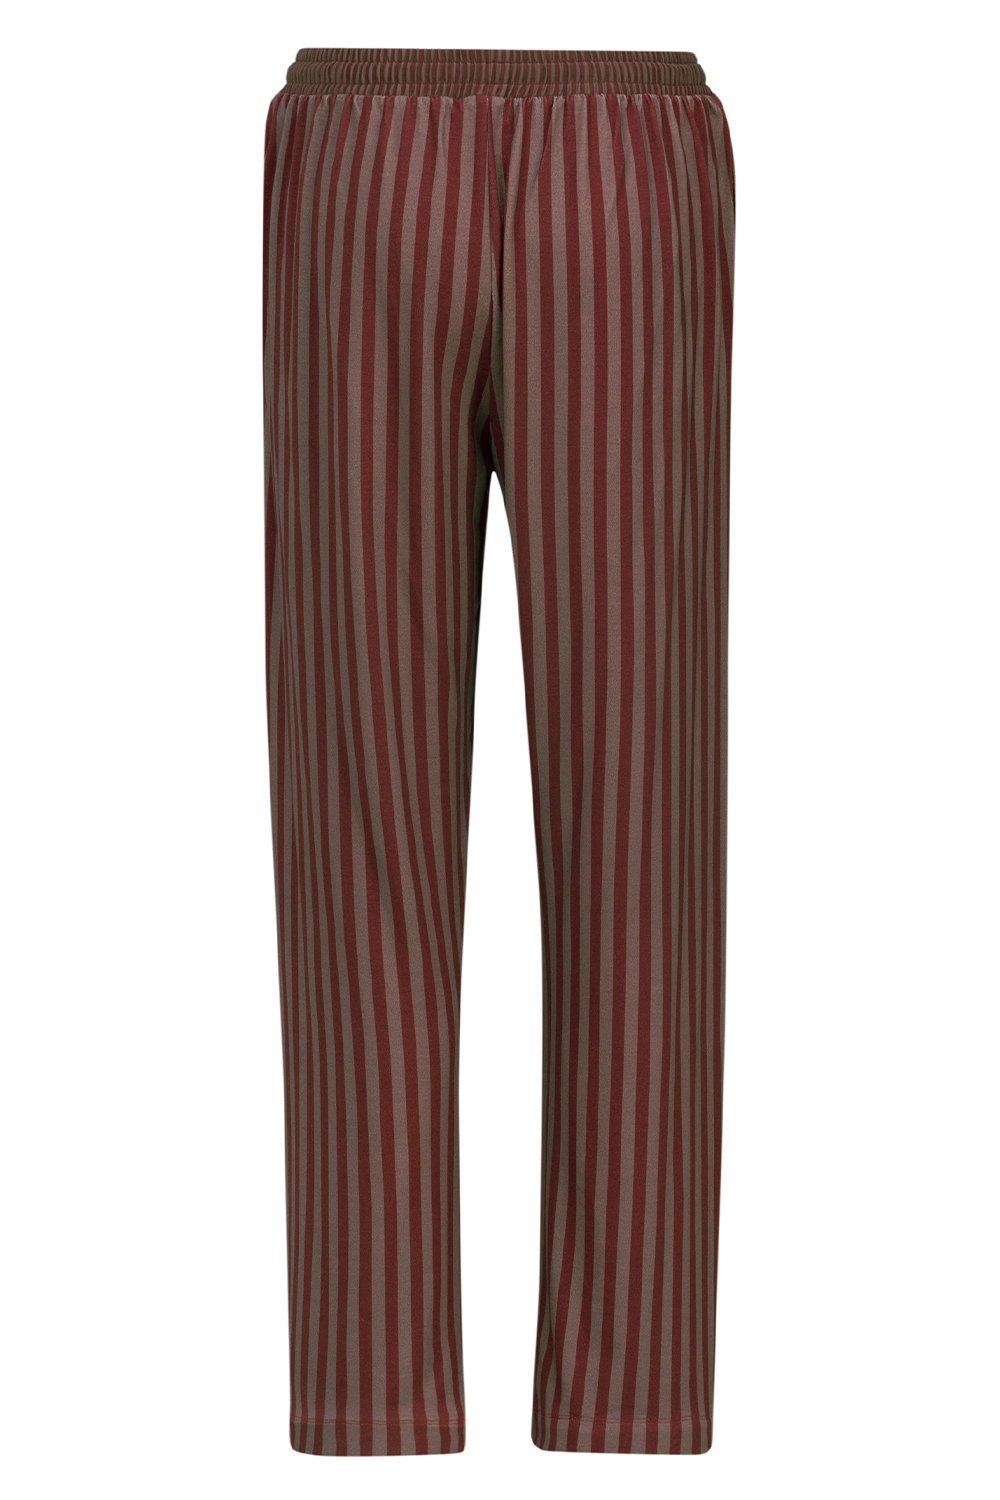 Sumo PiP Belin brown/red Loungehose Stripe 51500718-734 Long Trousers Studio